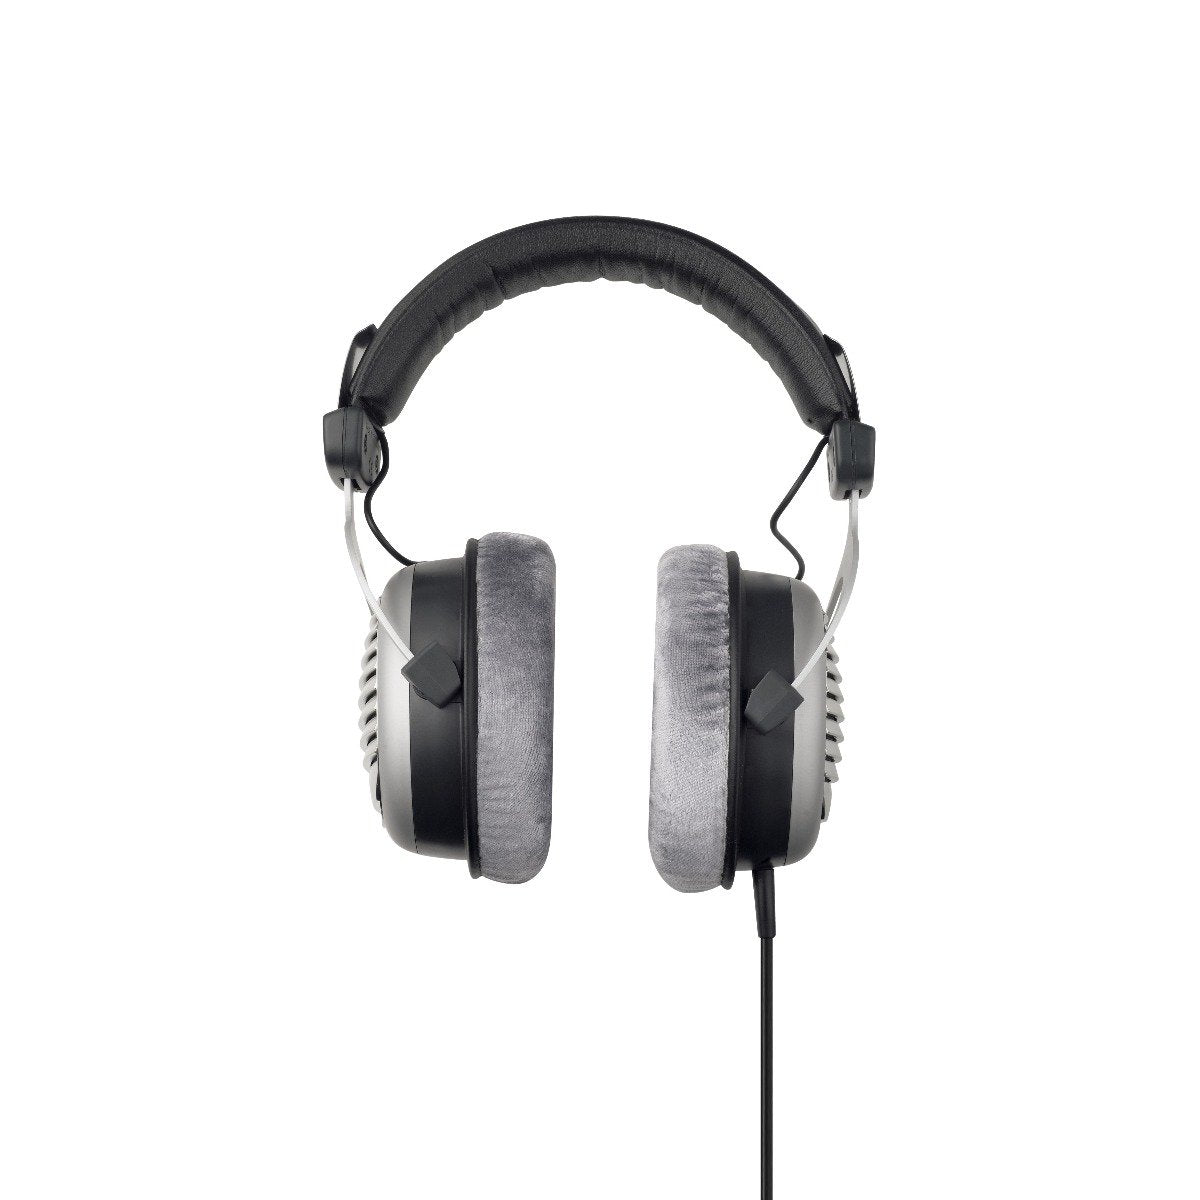 Beyerdynamic DT 990 Pro 250 Ohm Open-Back Over-Ear Monitoring Headphones